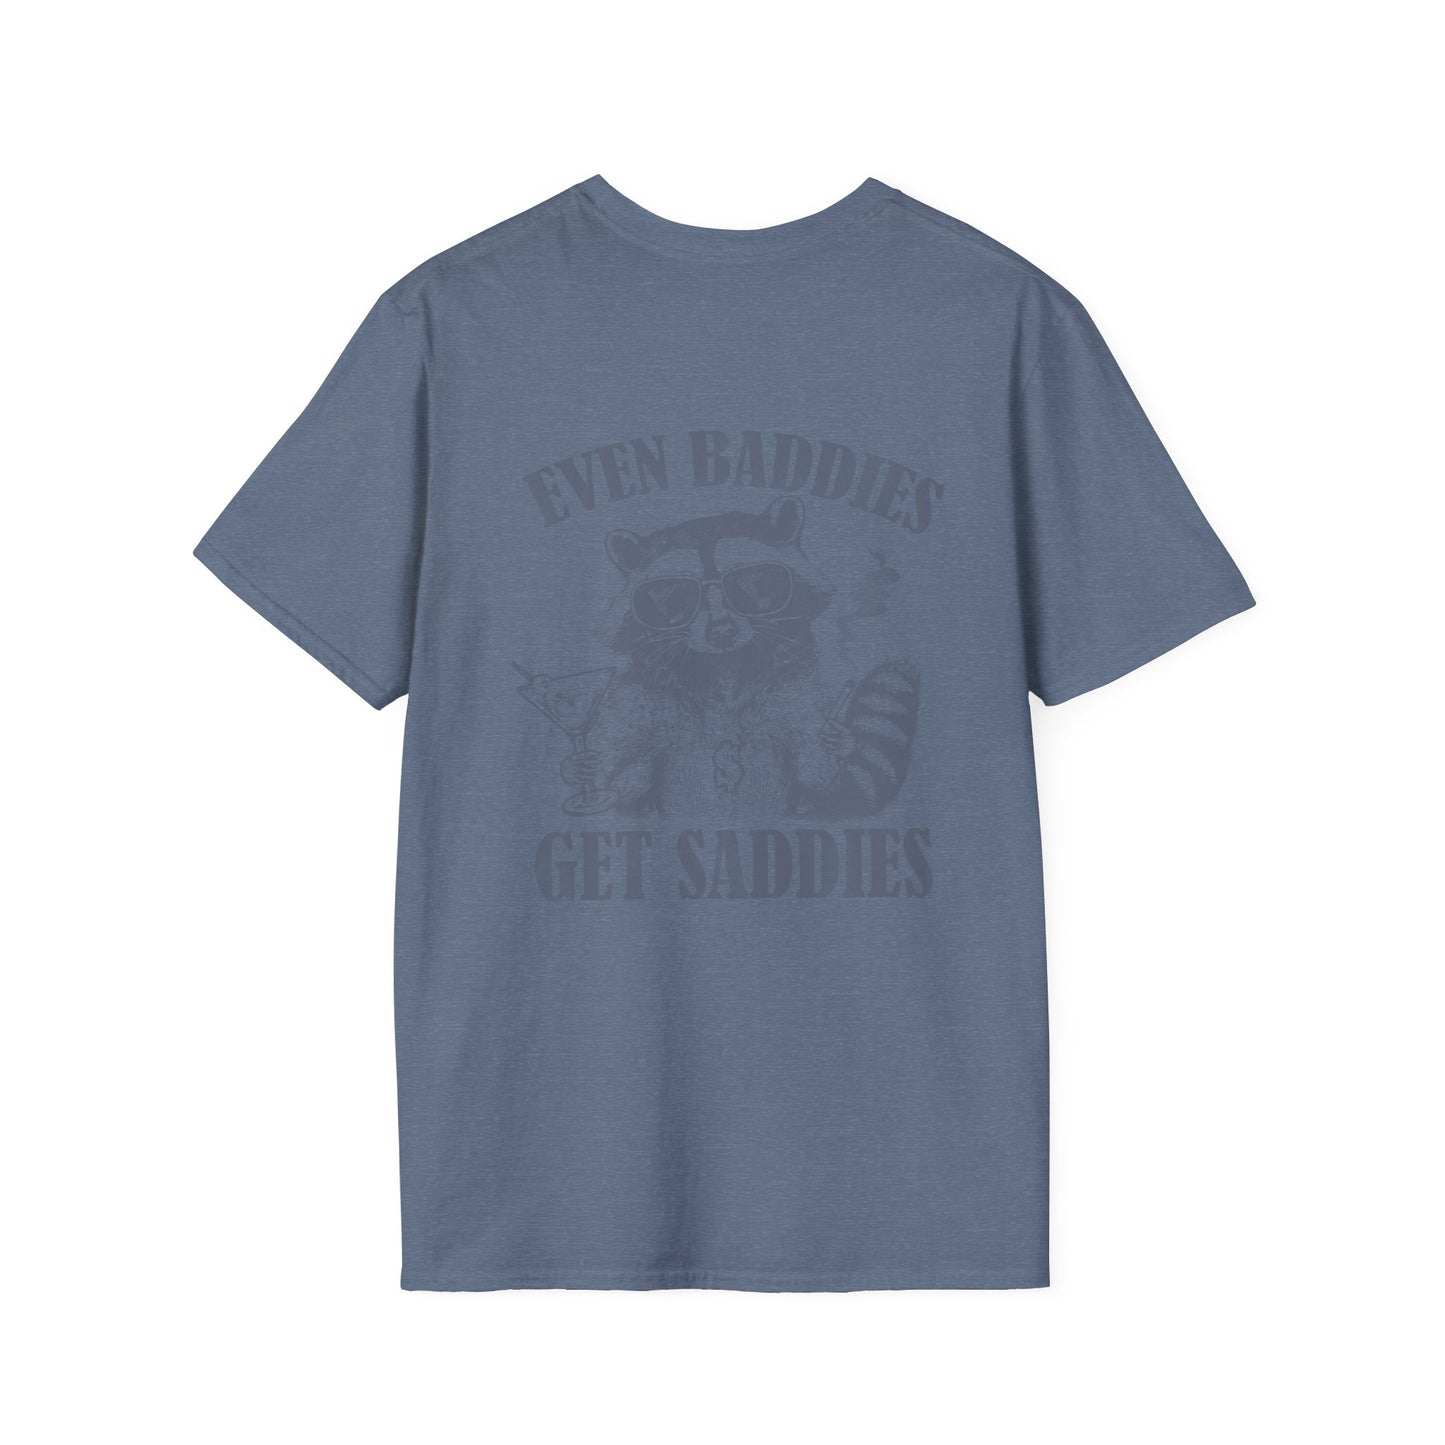 Softstyle Even Baddies Get Saddies T-Shirt